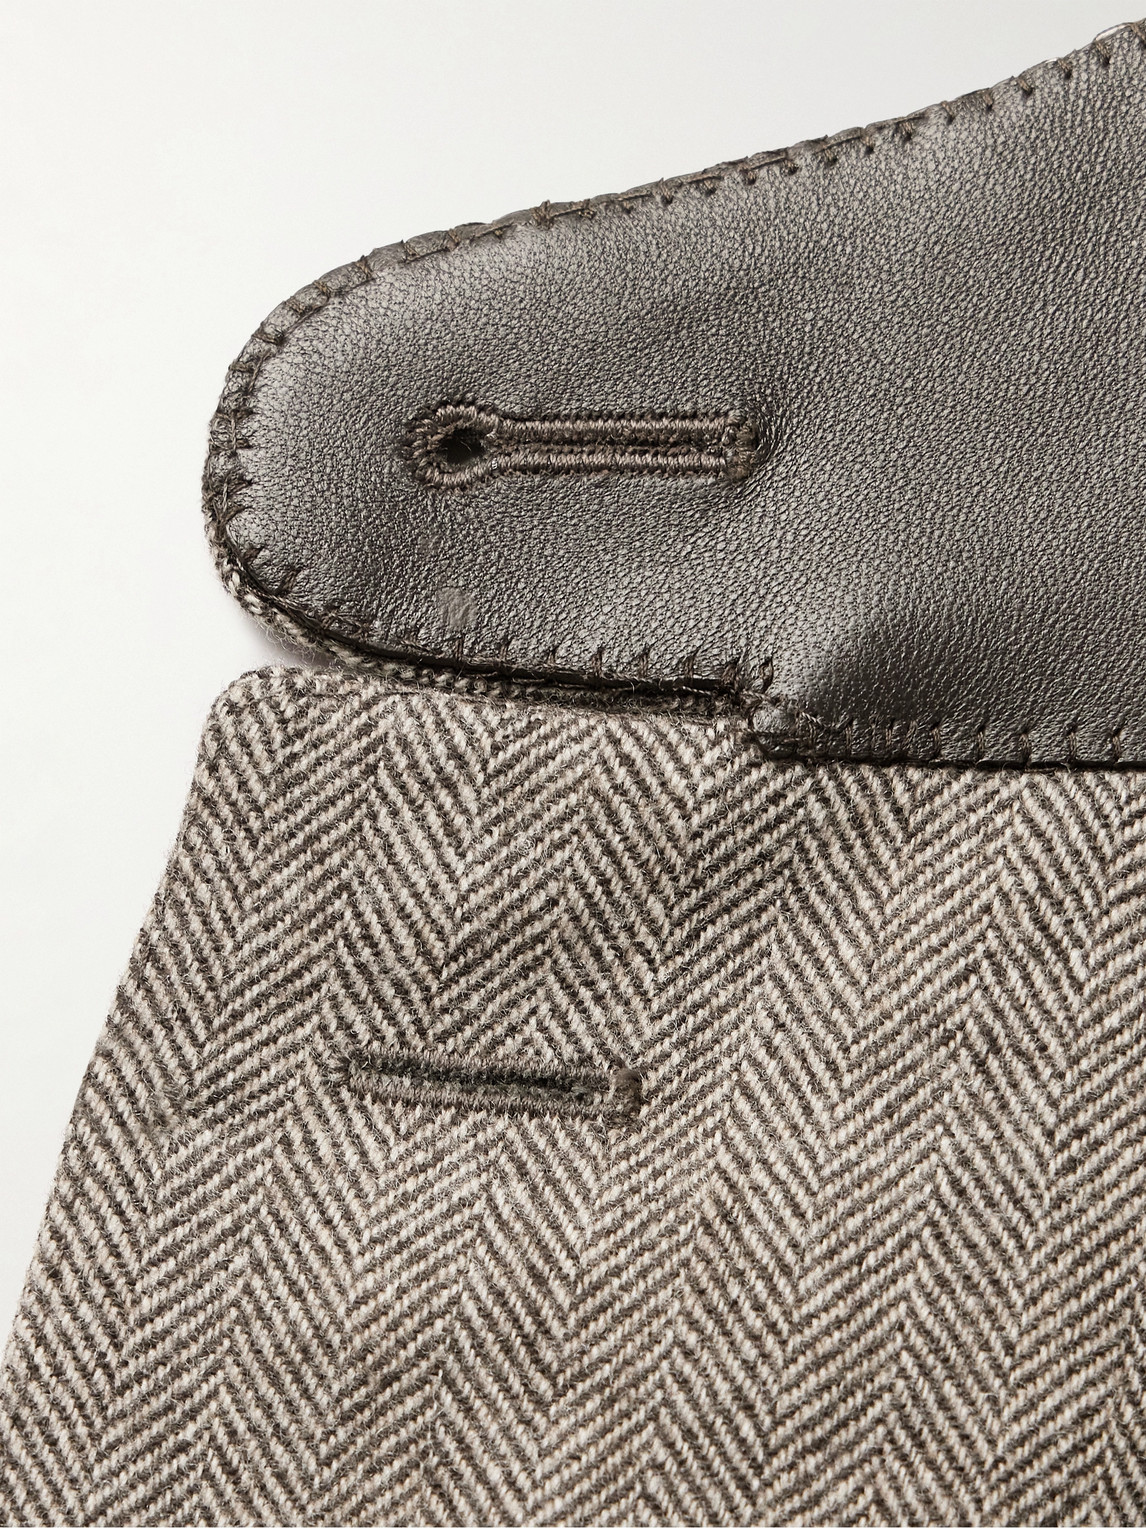 Shop Purdey Hacking Leather-trimmed Herringbone Wool And Cashmere-blend Tweed Blazer In Neutrals